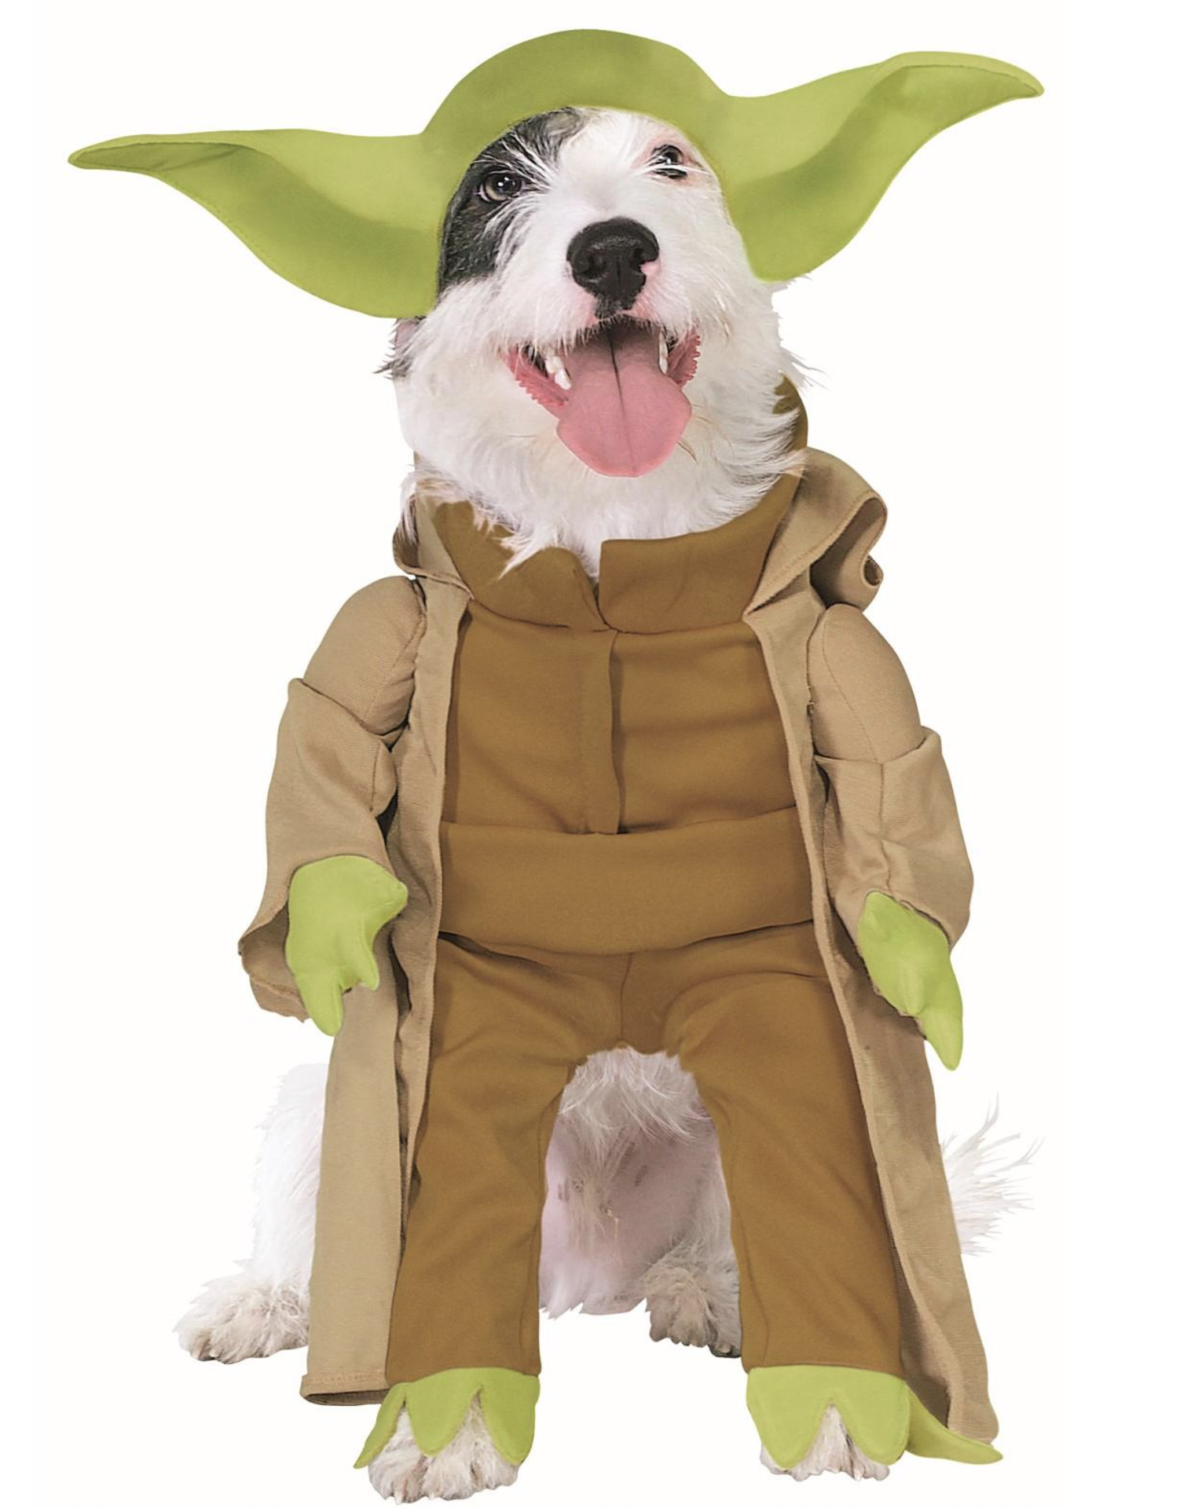 dog in star wars costumes: Disney dog names